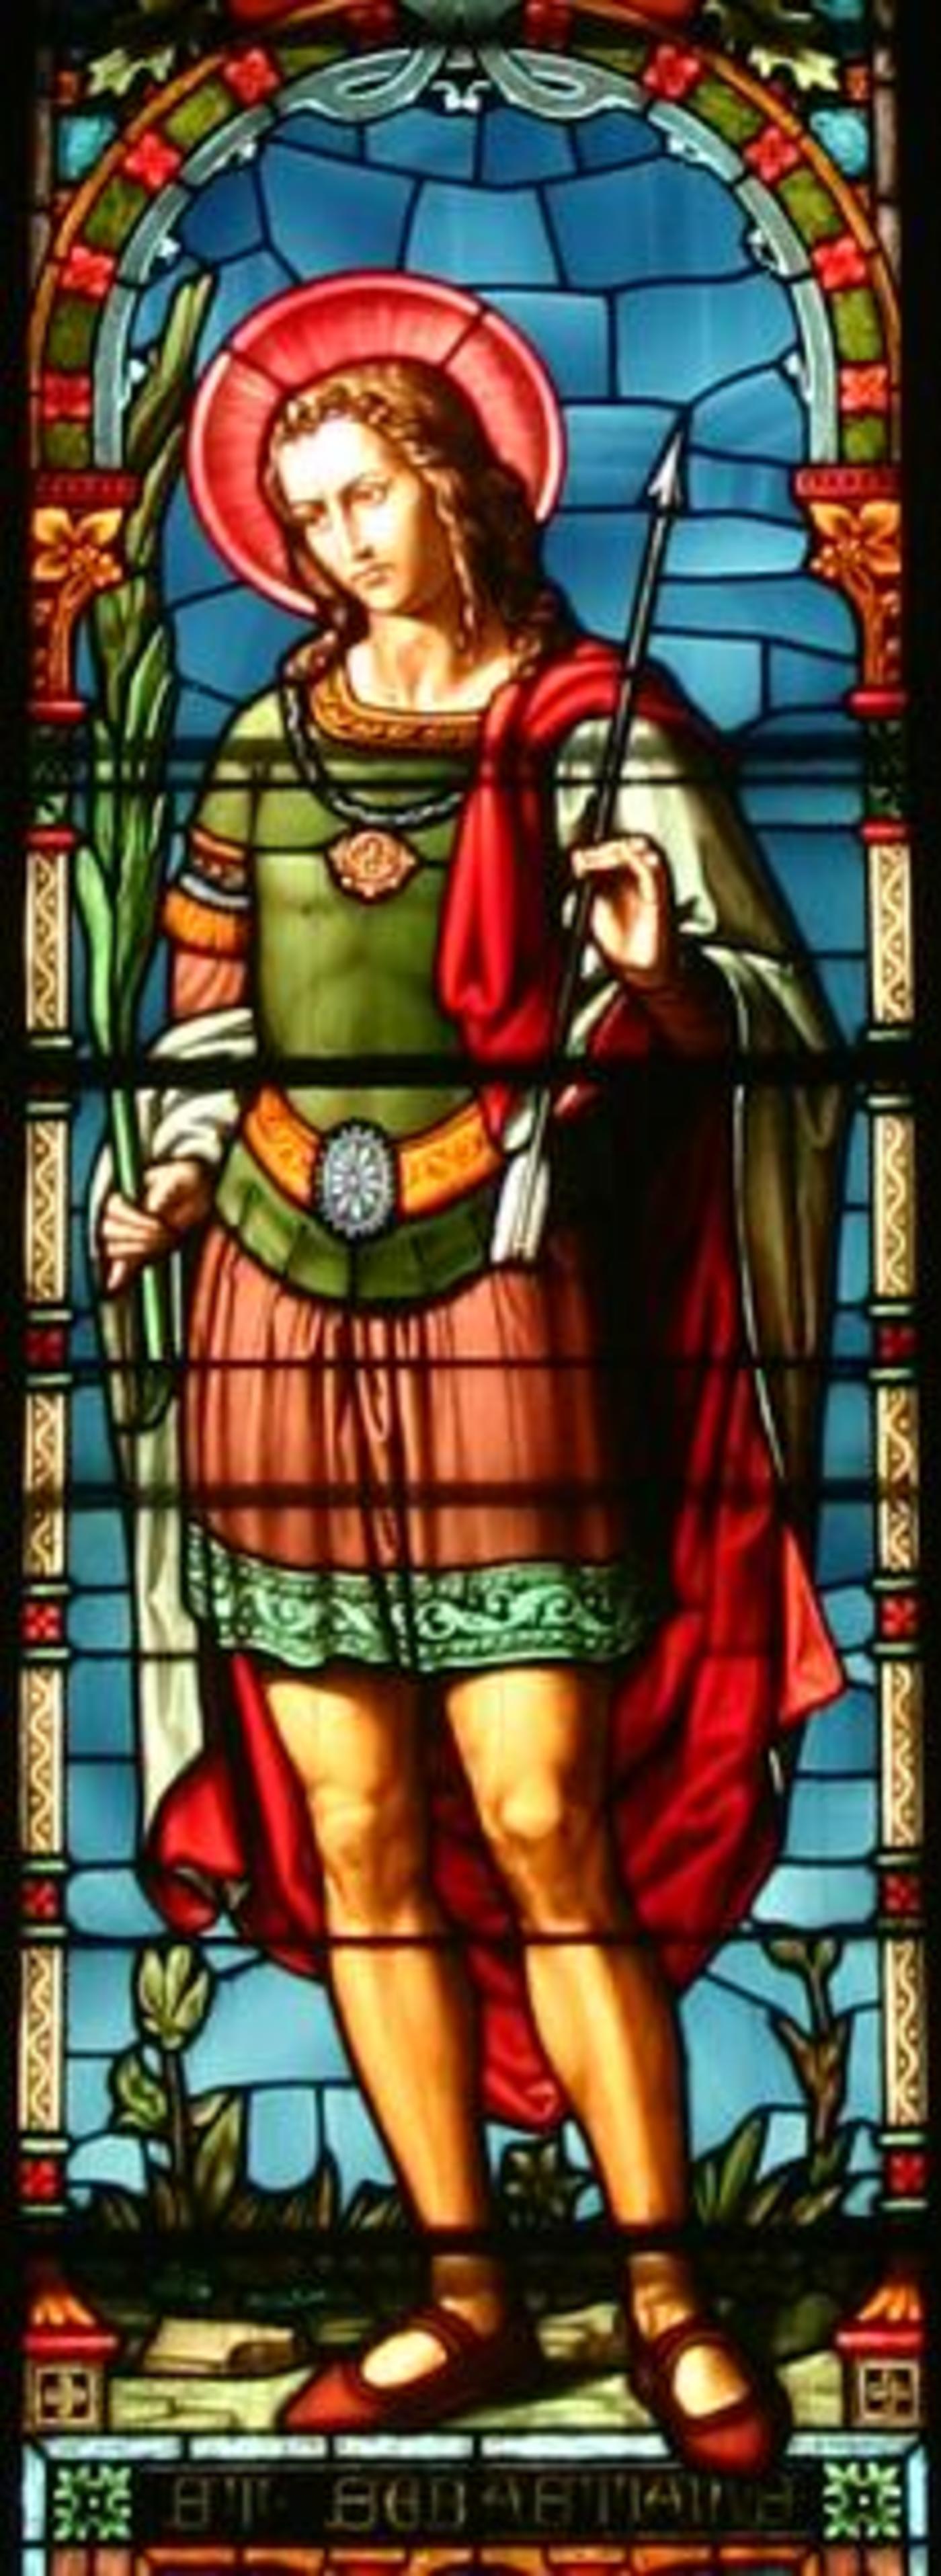 Window 24: Saint Sebastian, Martyr